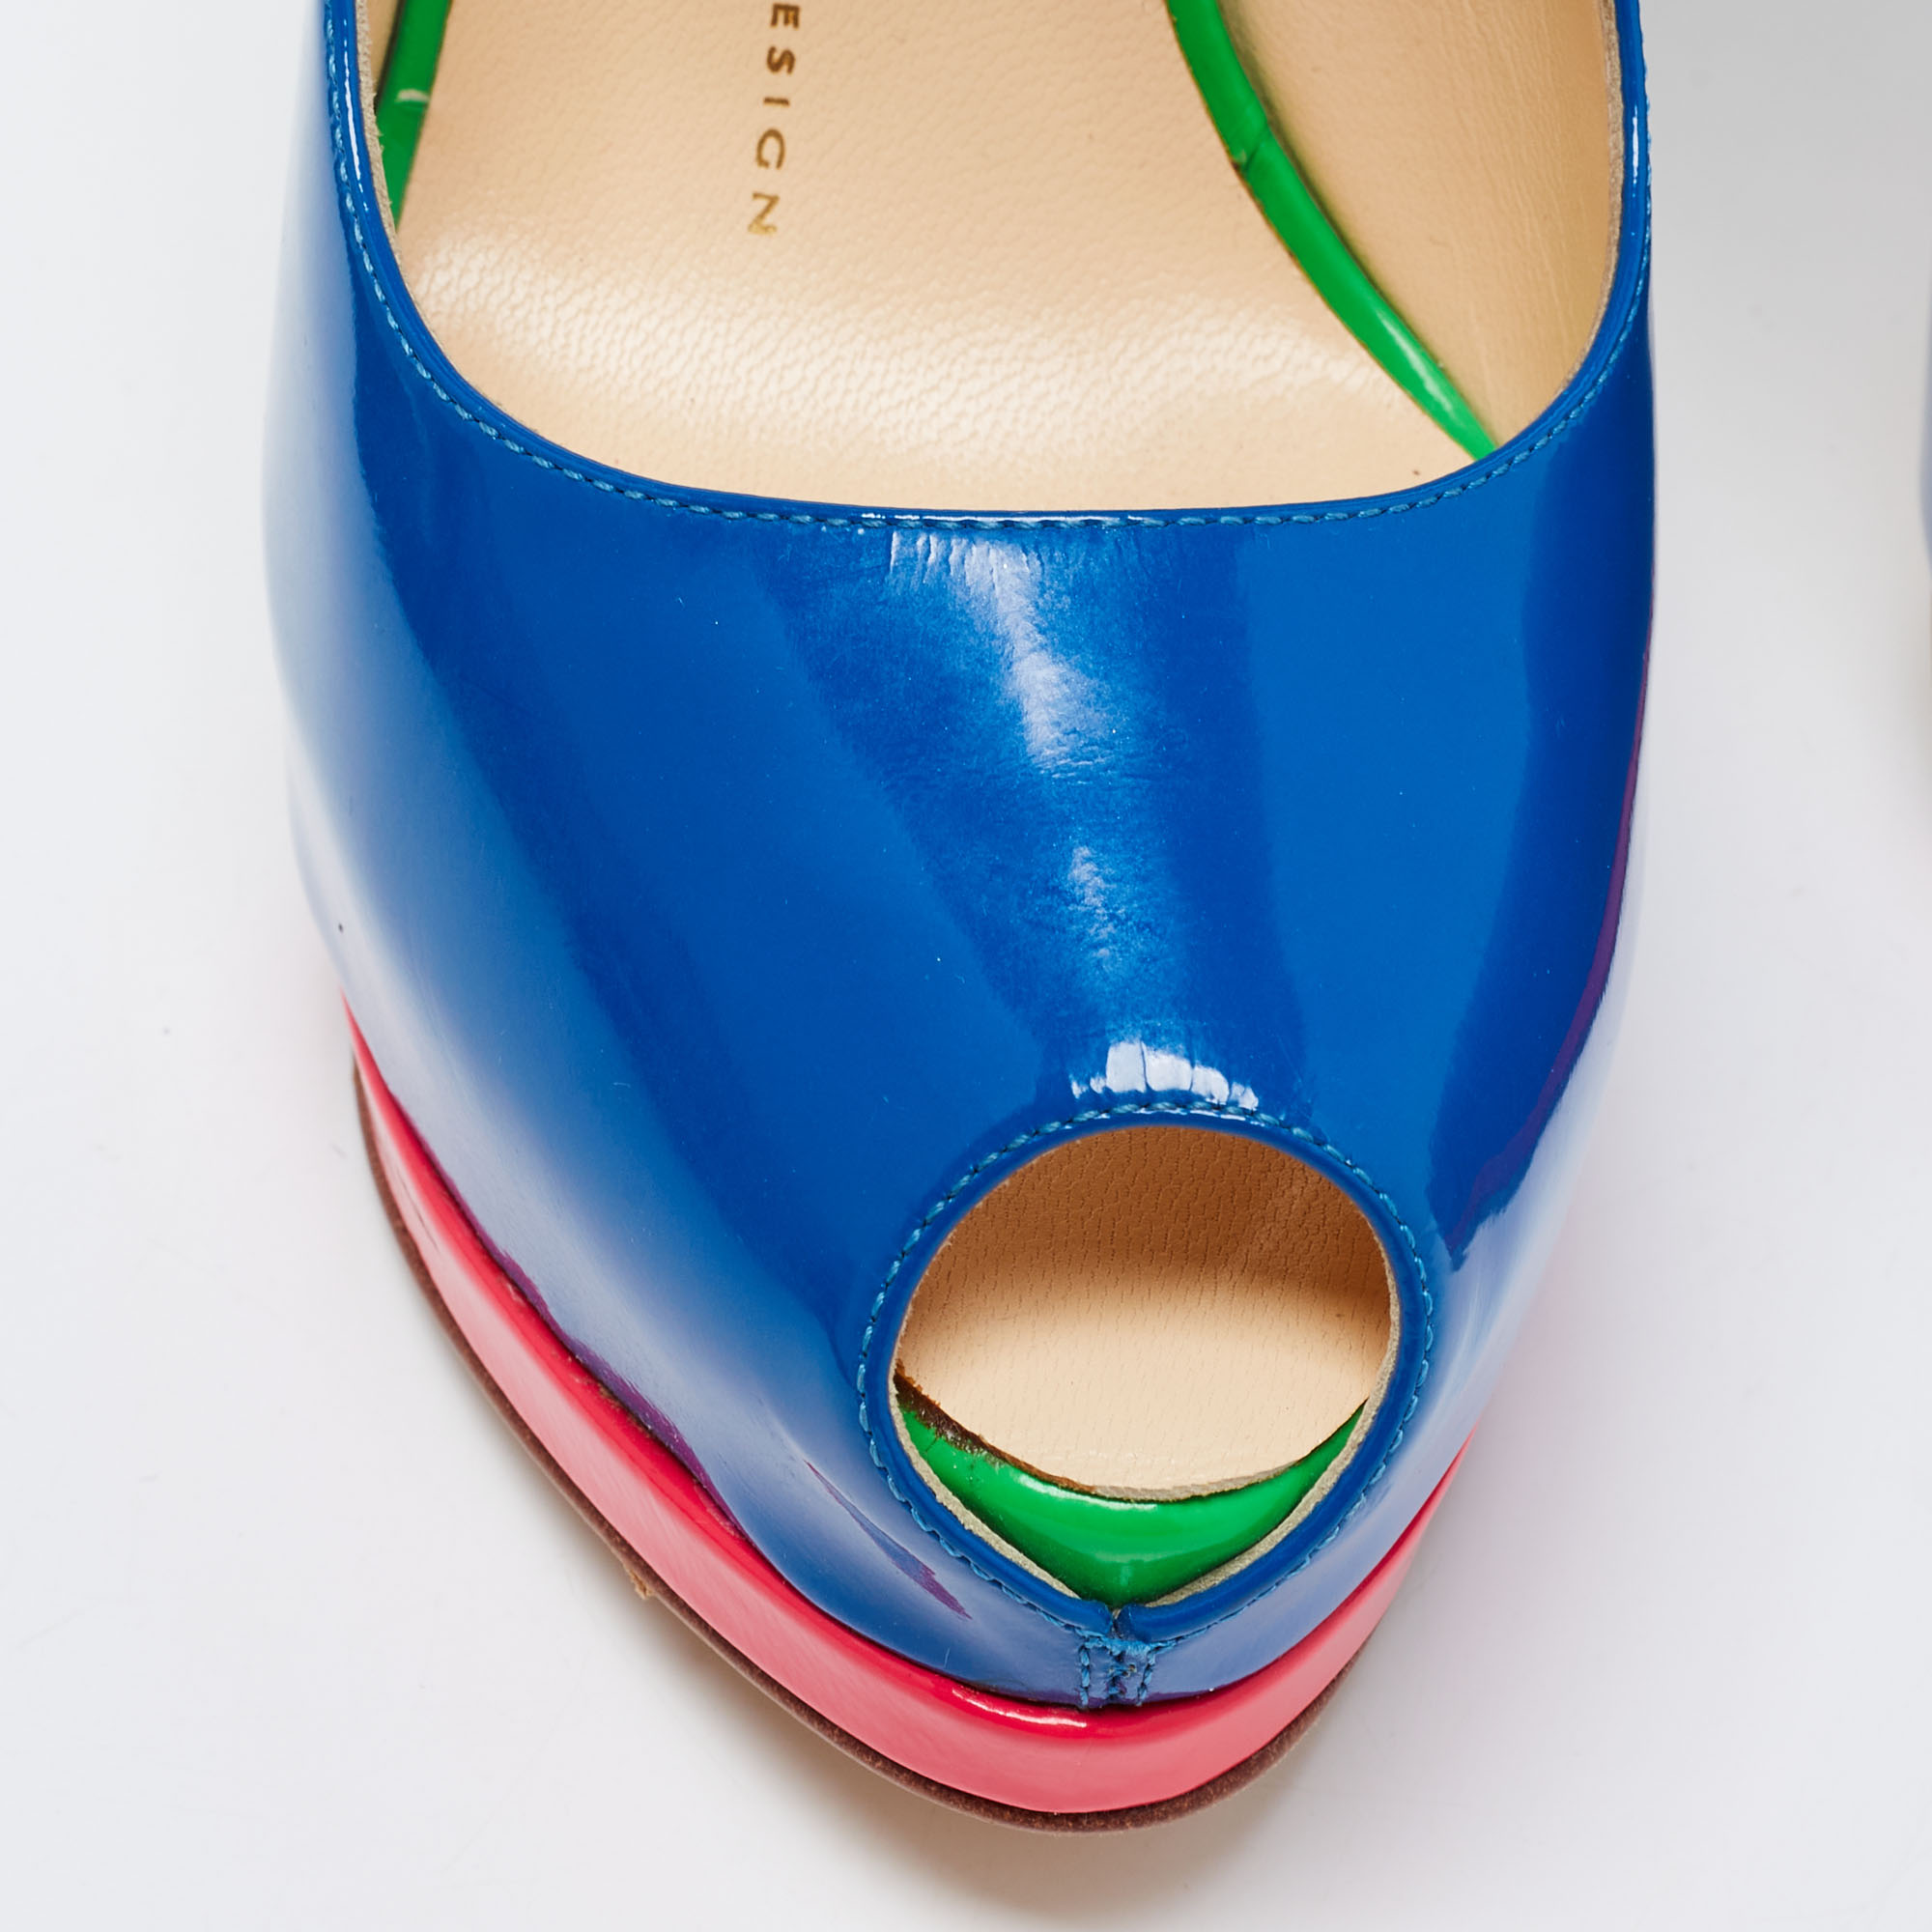 Giuseppe Zanotti Multicolour Patent Leather Tripe Strap Peep Toe Pumps Size 37